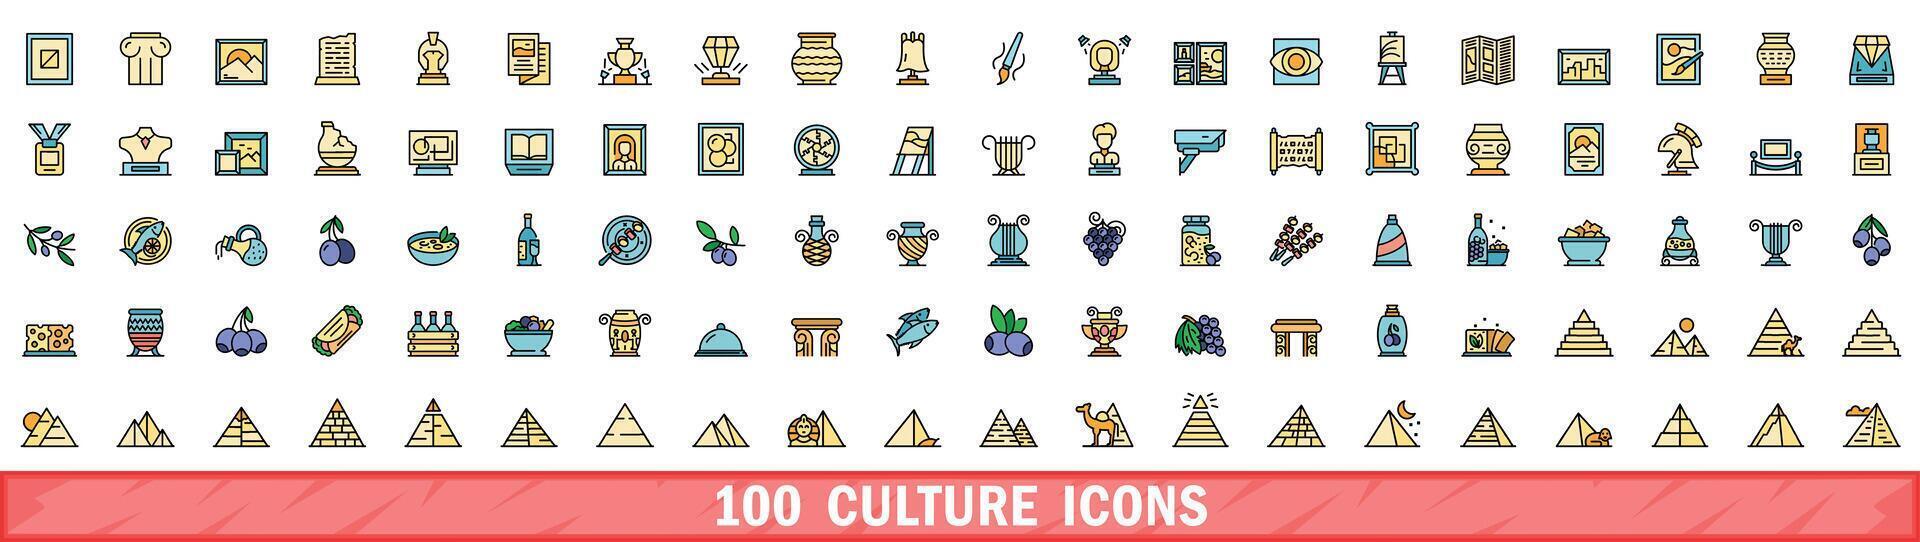 100 culture icons set, color line style vector